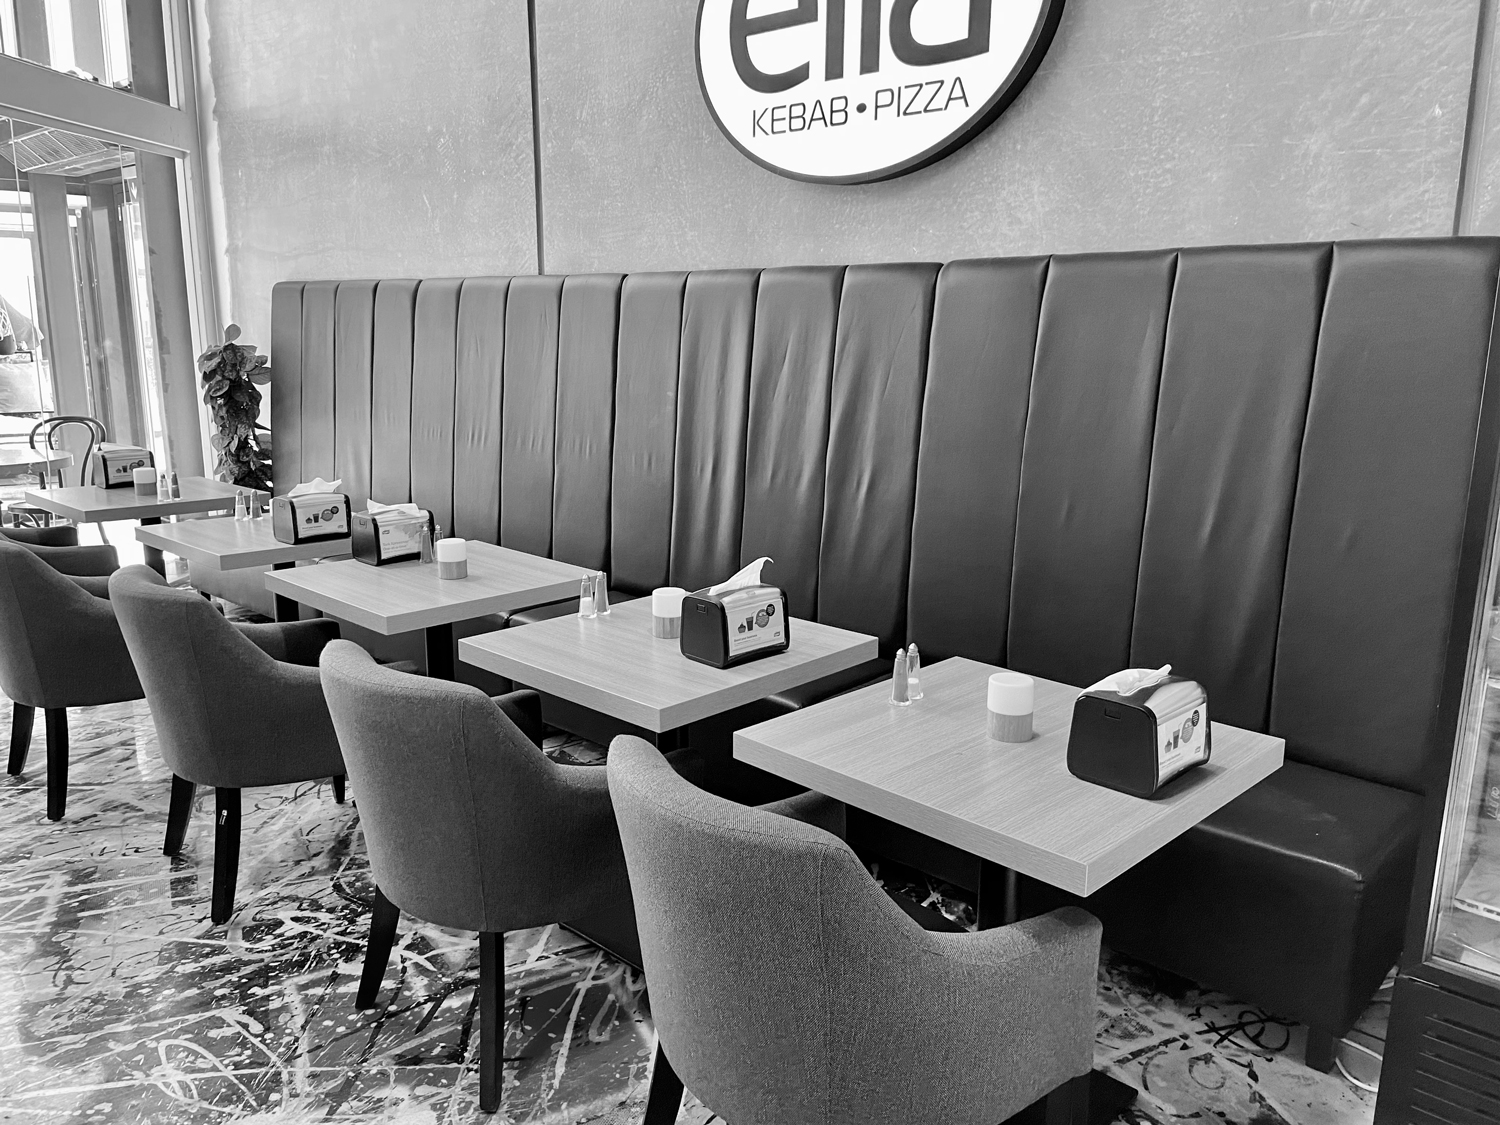 Restaurant Ella